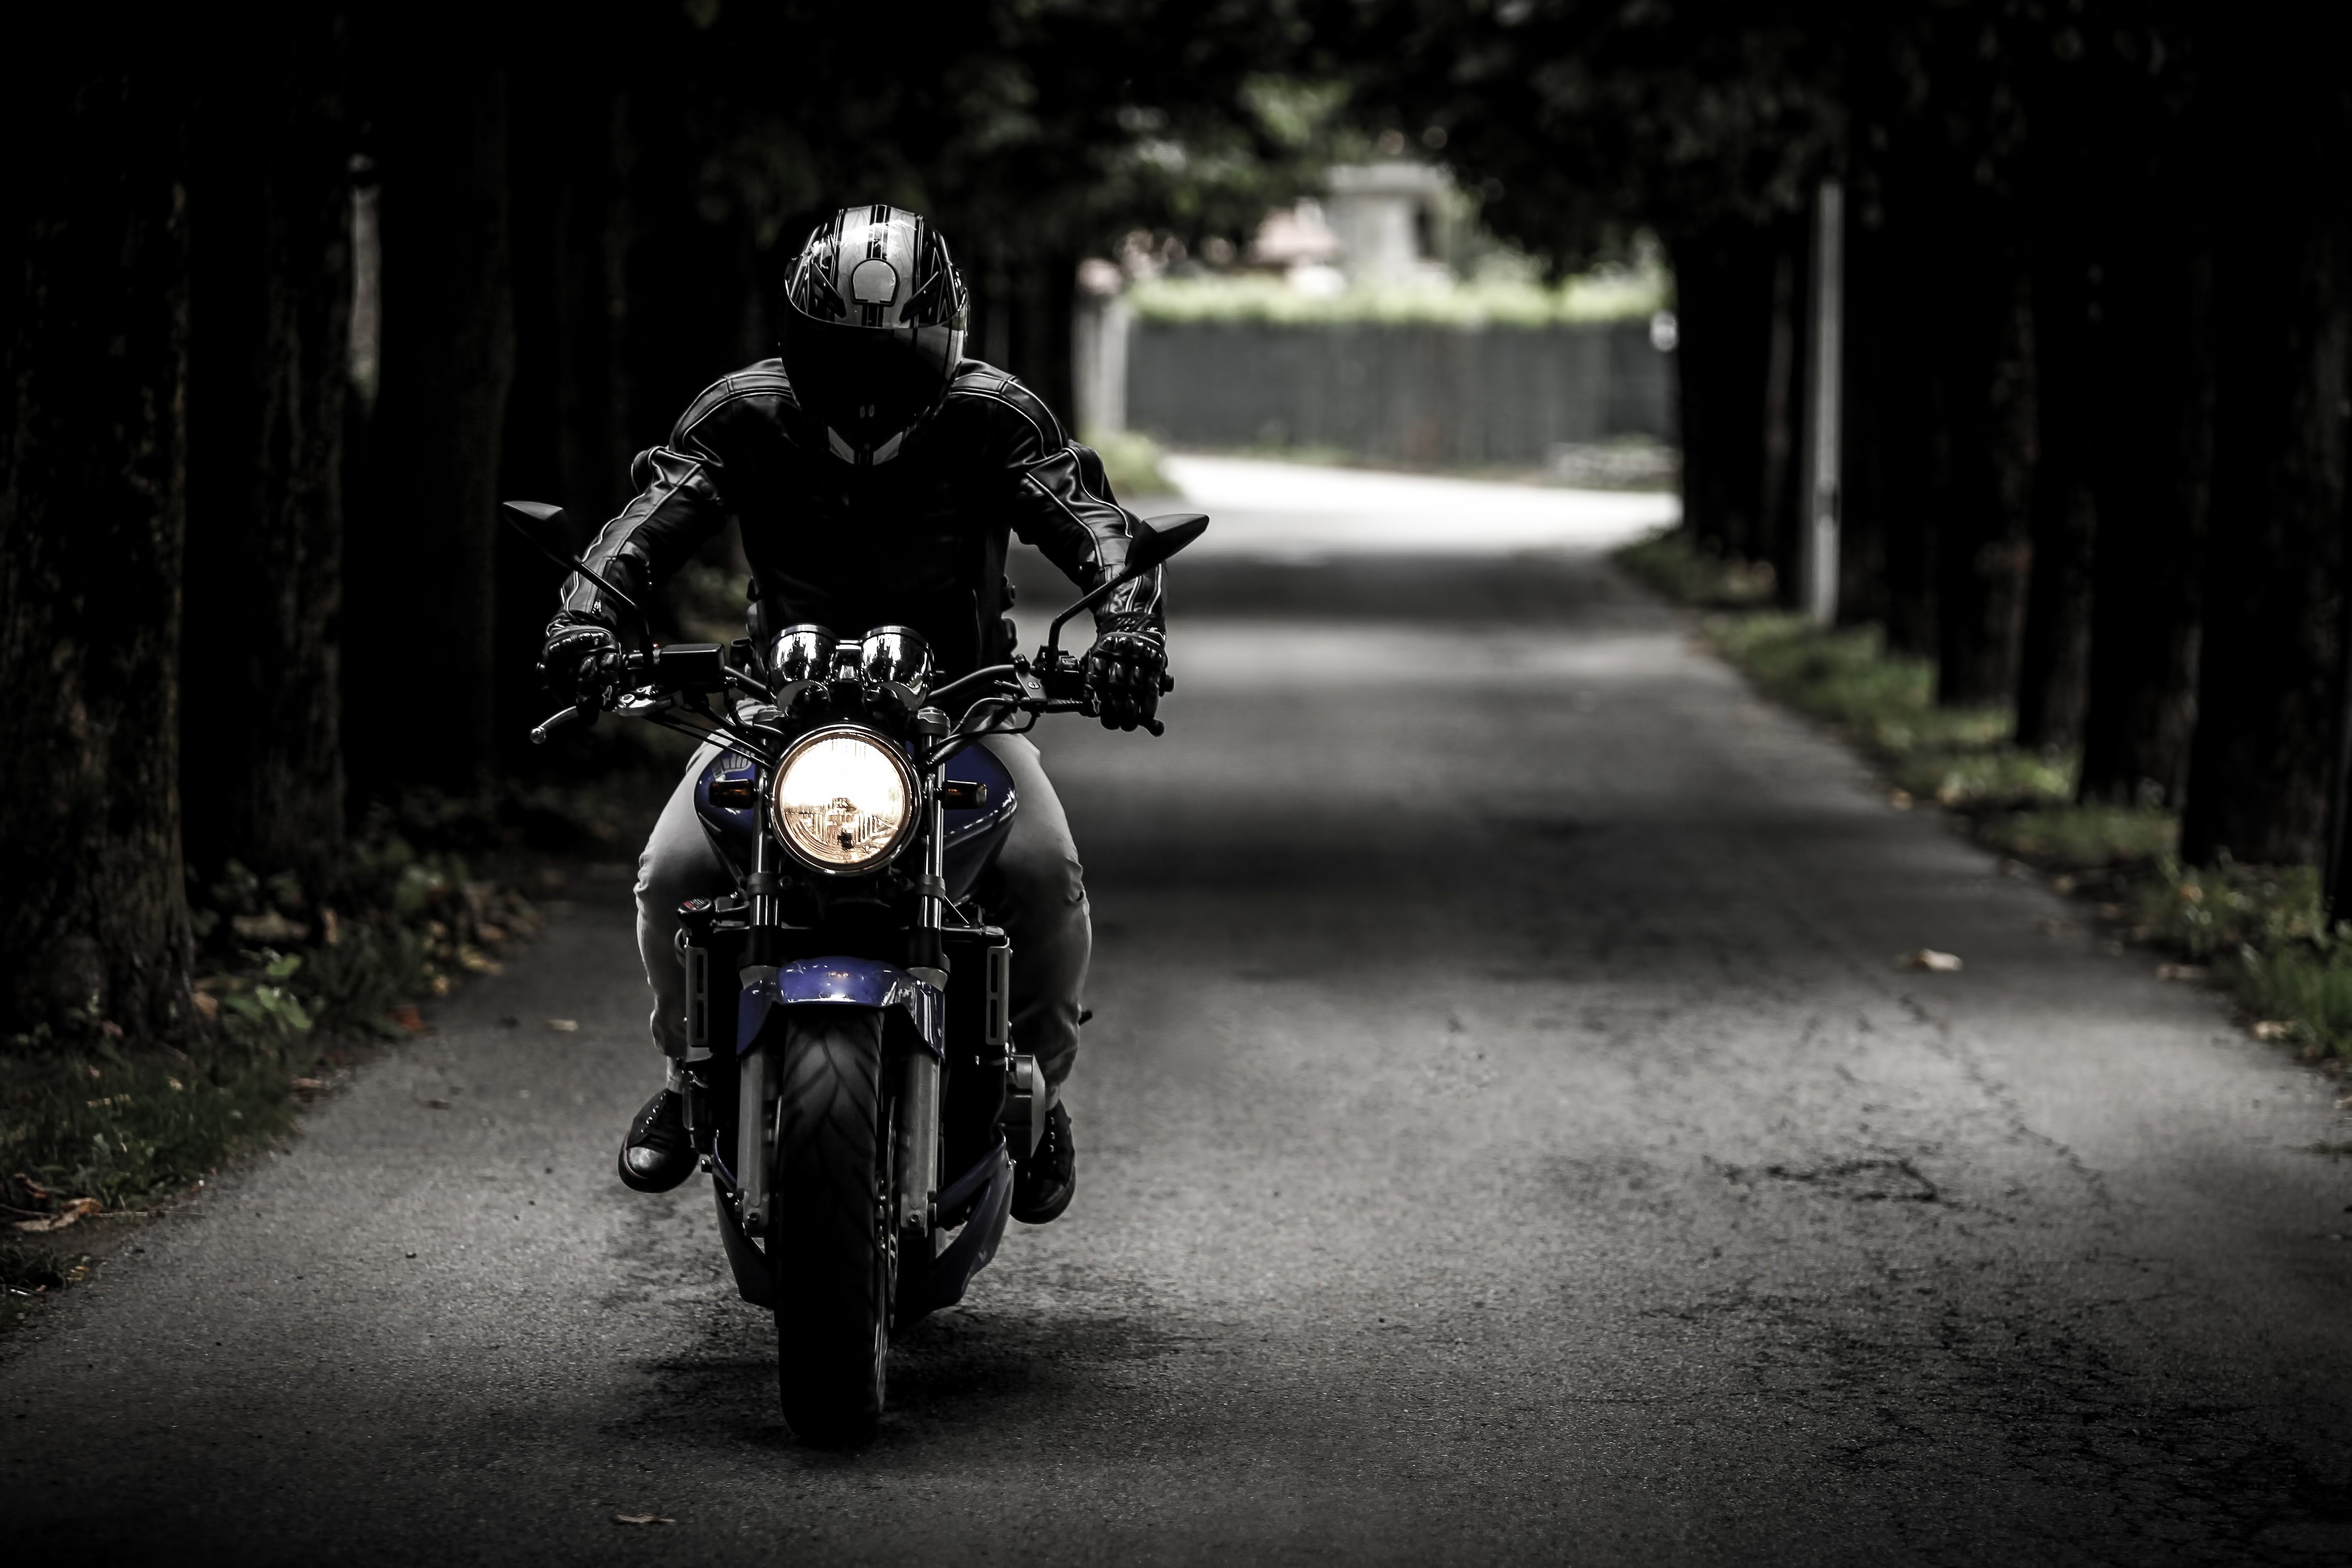 biker, helmet, motorcyclist, motorcycles, traffic, movement, motorcycle